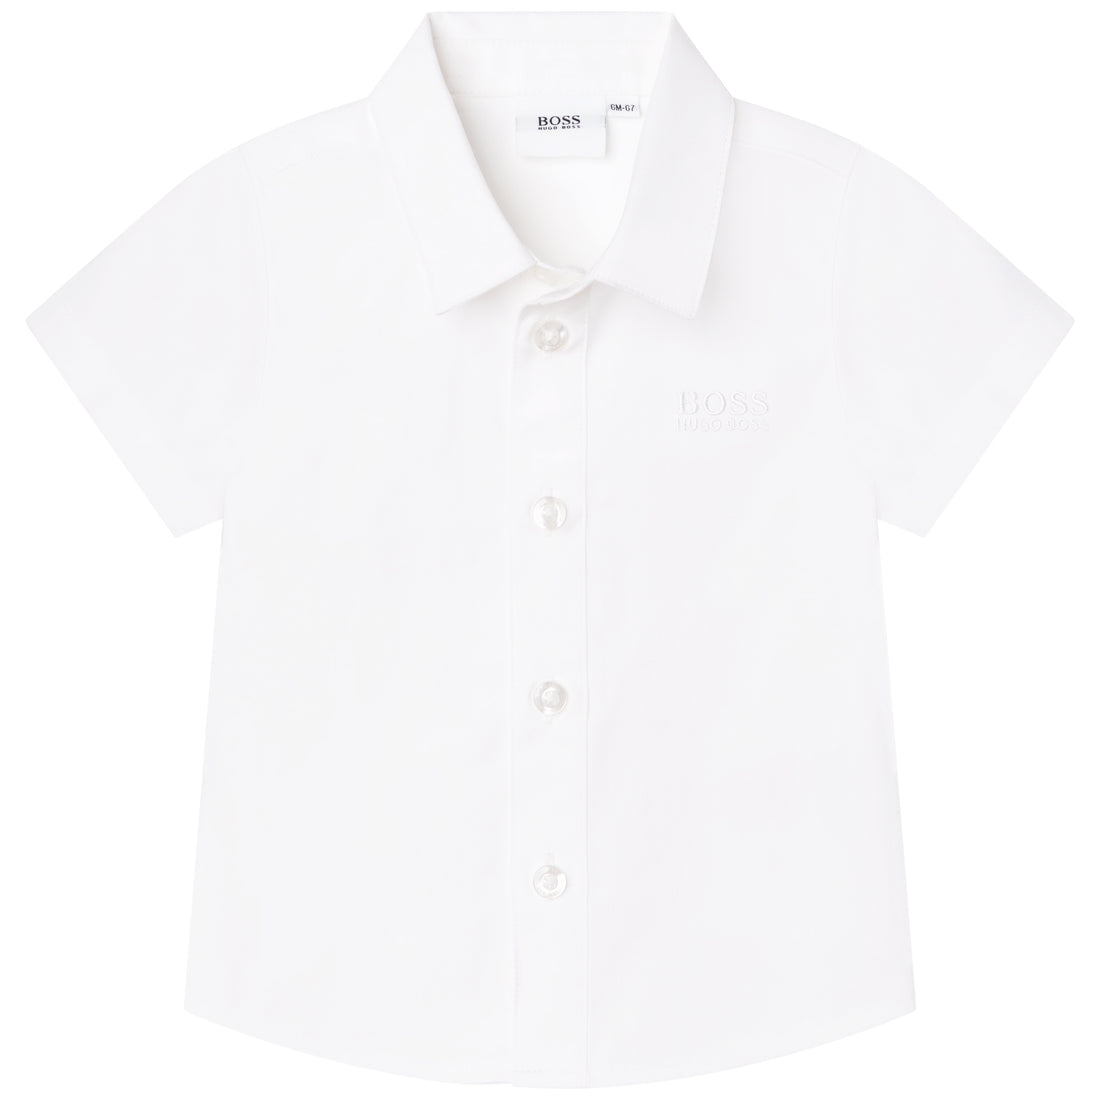 Boss Short Sleeve Shirt Style: J05929